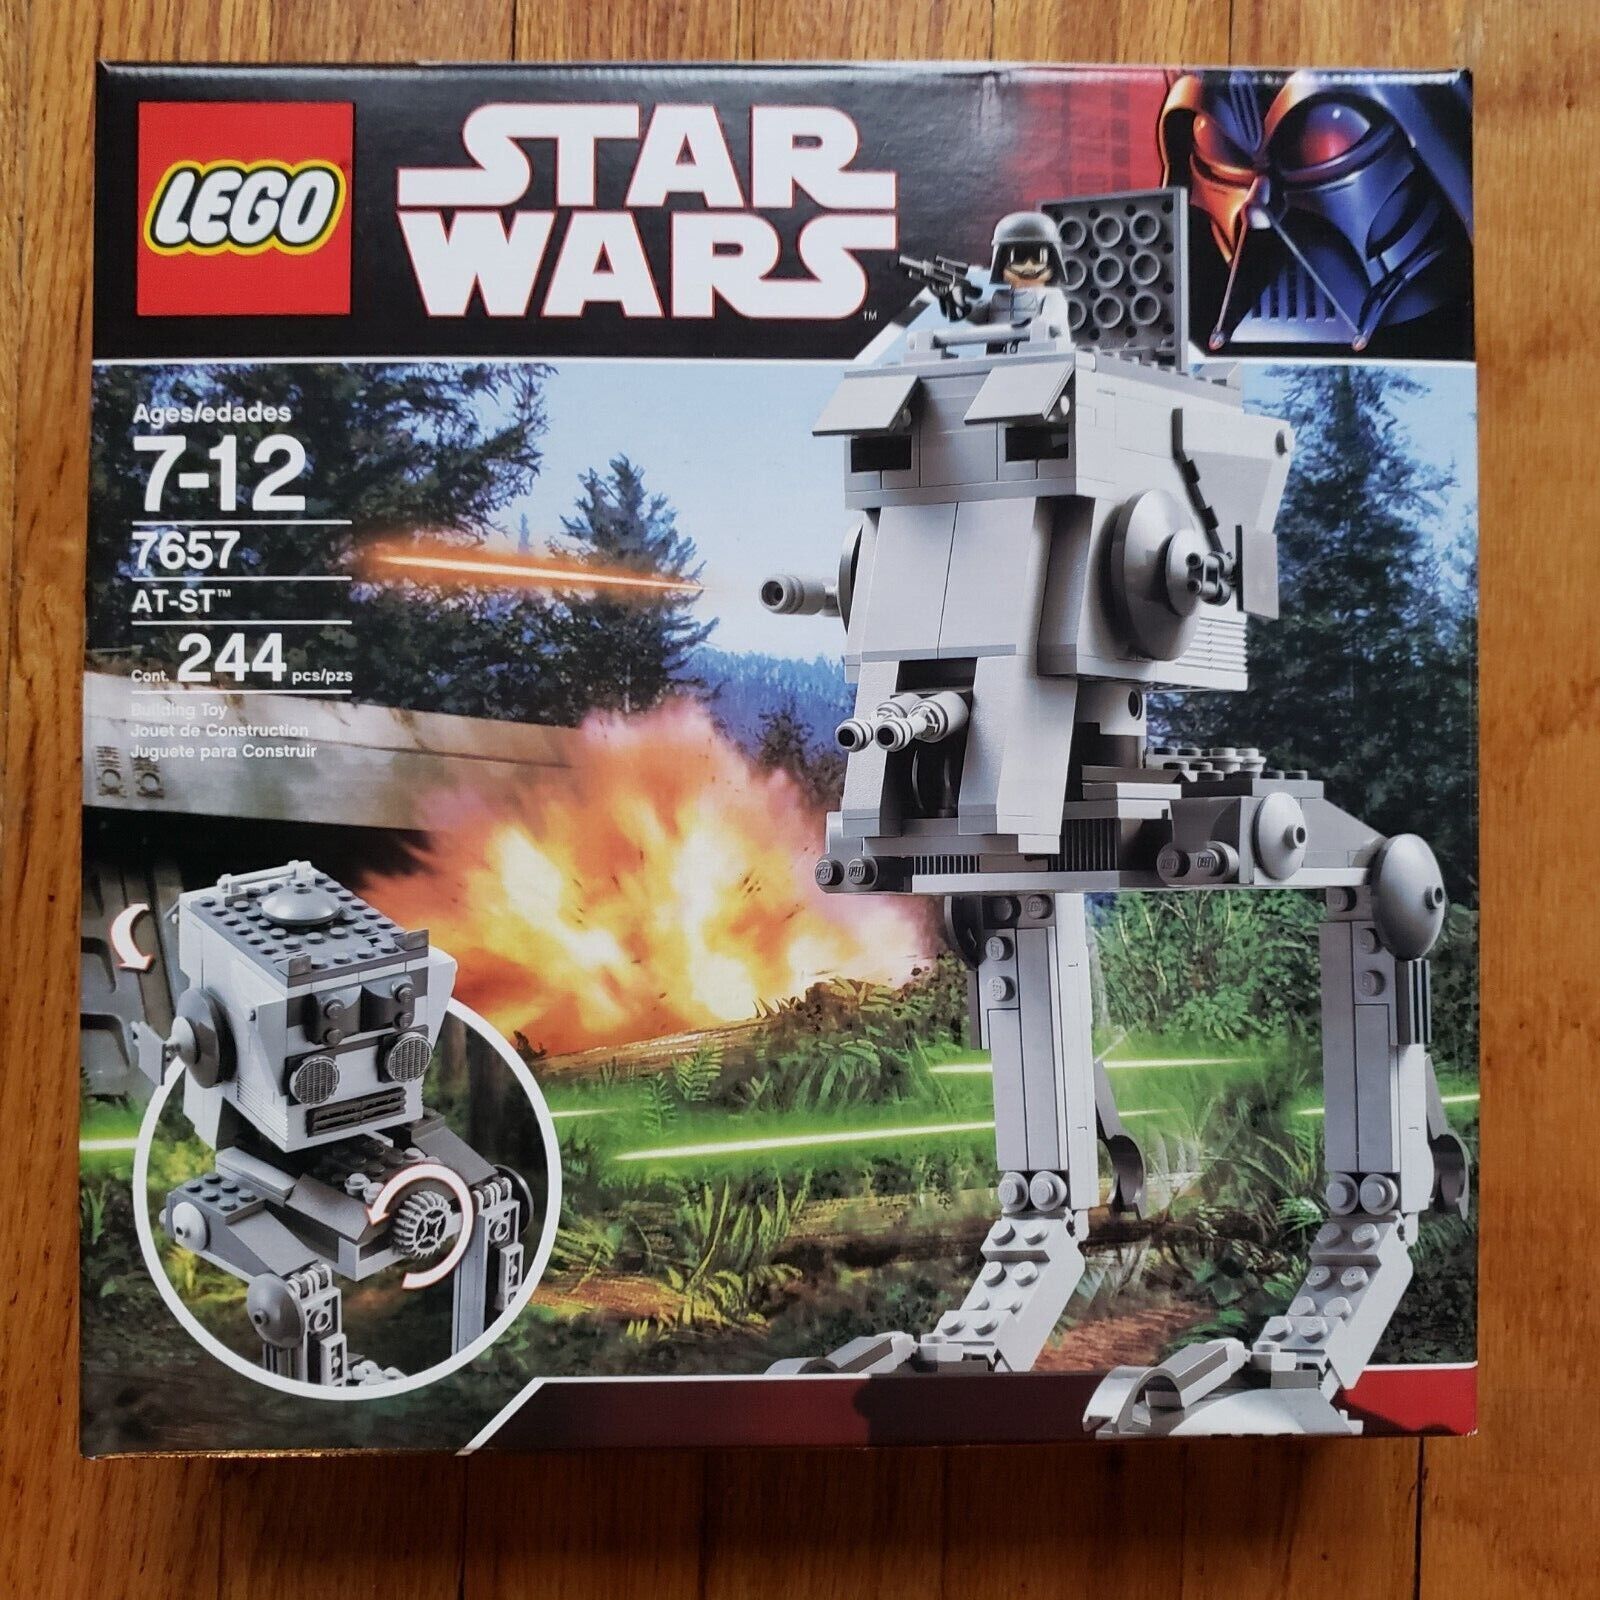 Kom op atom tyv LEGO Star Wars: AT-ST (7657) Set / New Factory Sealed Box 673419090766 |  eBay